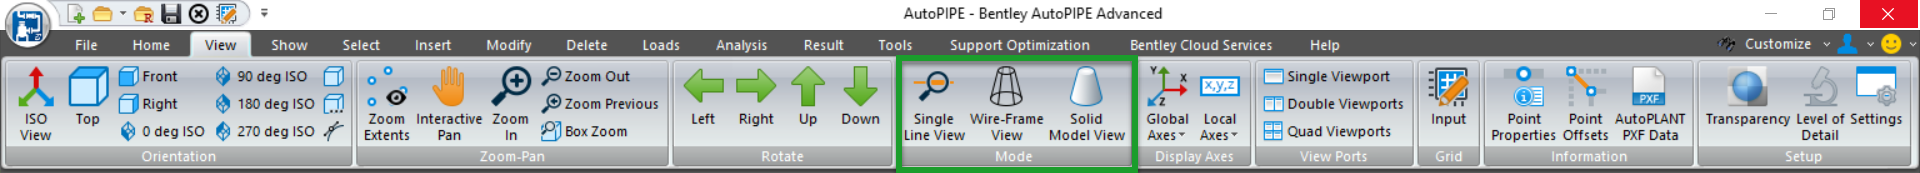 AutoPIPE workflow, AutoPIPE Design software